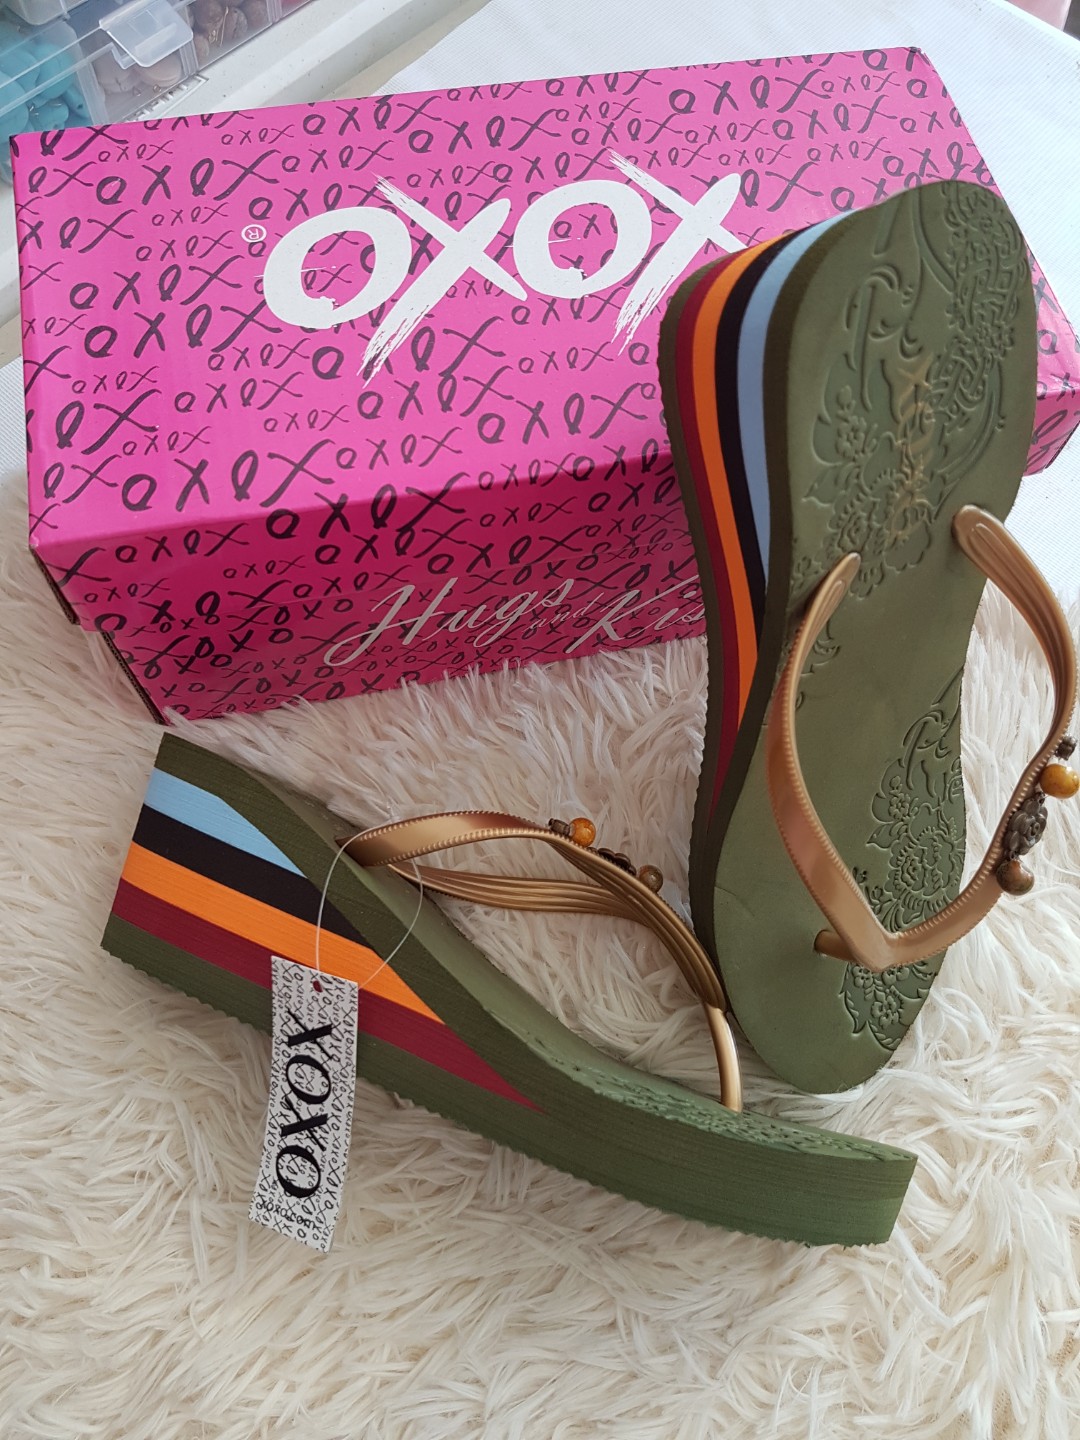 xoxo brand shoes